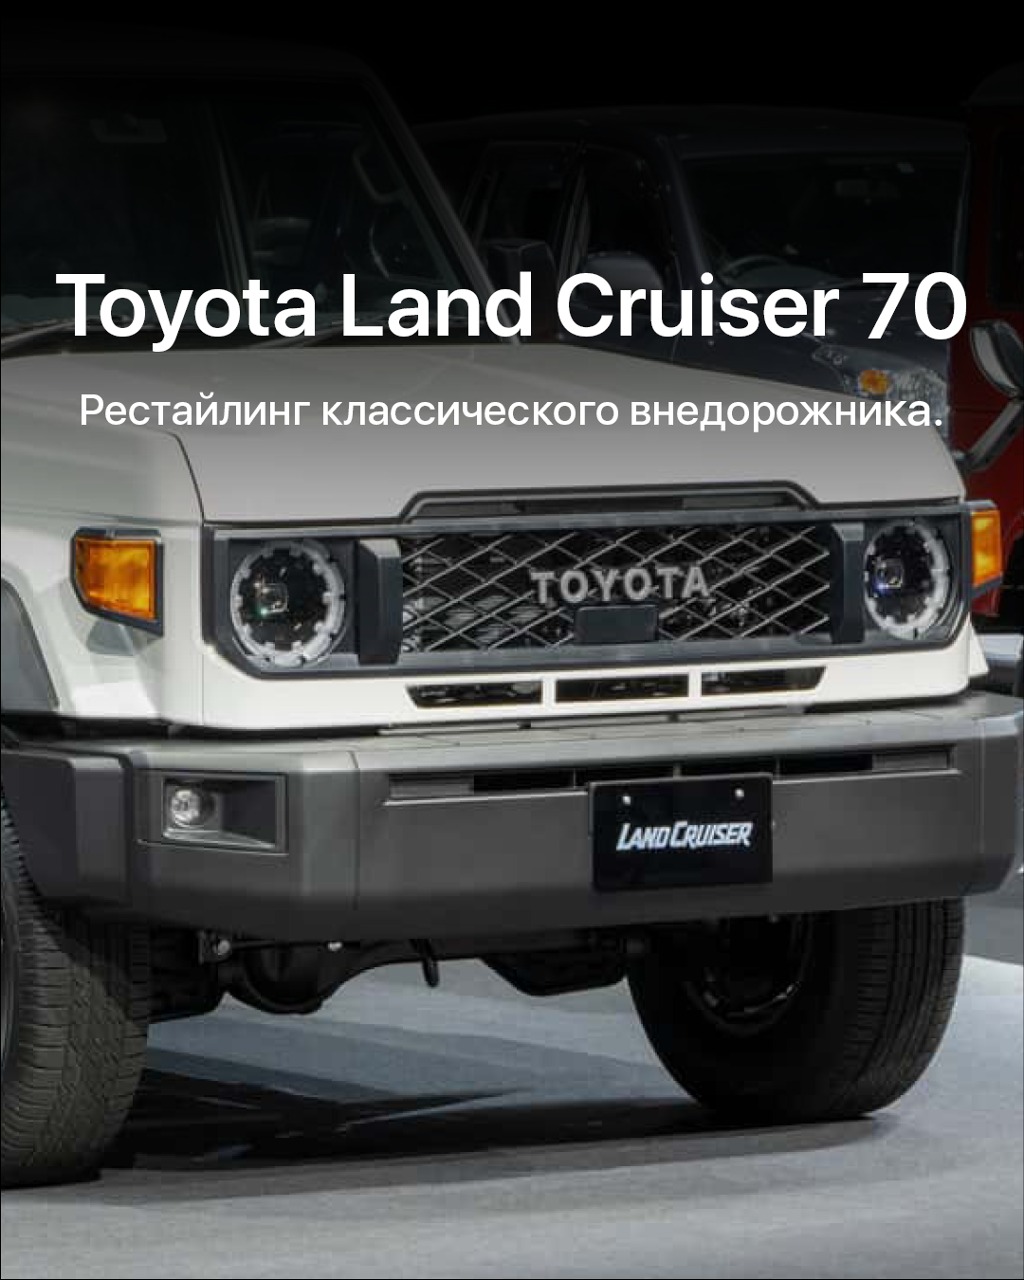 Рестайлинг Toyota Land Cruiser 70.